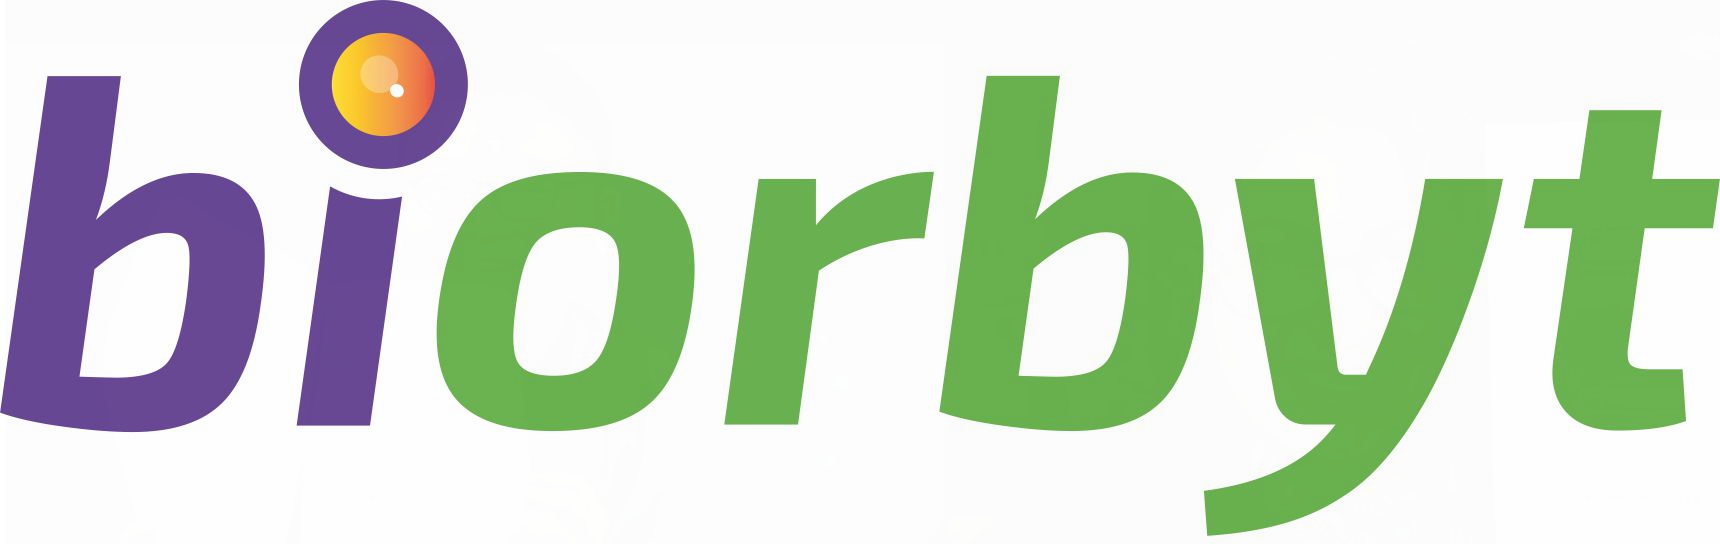 biorbyt-high-res-logo-ko-strapline